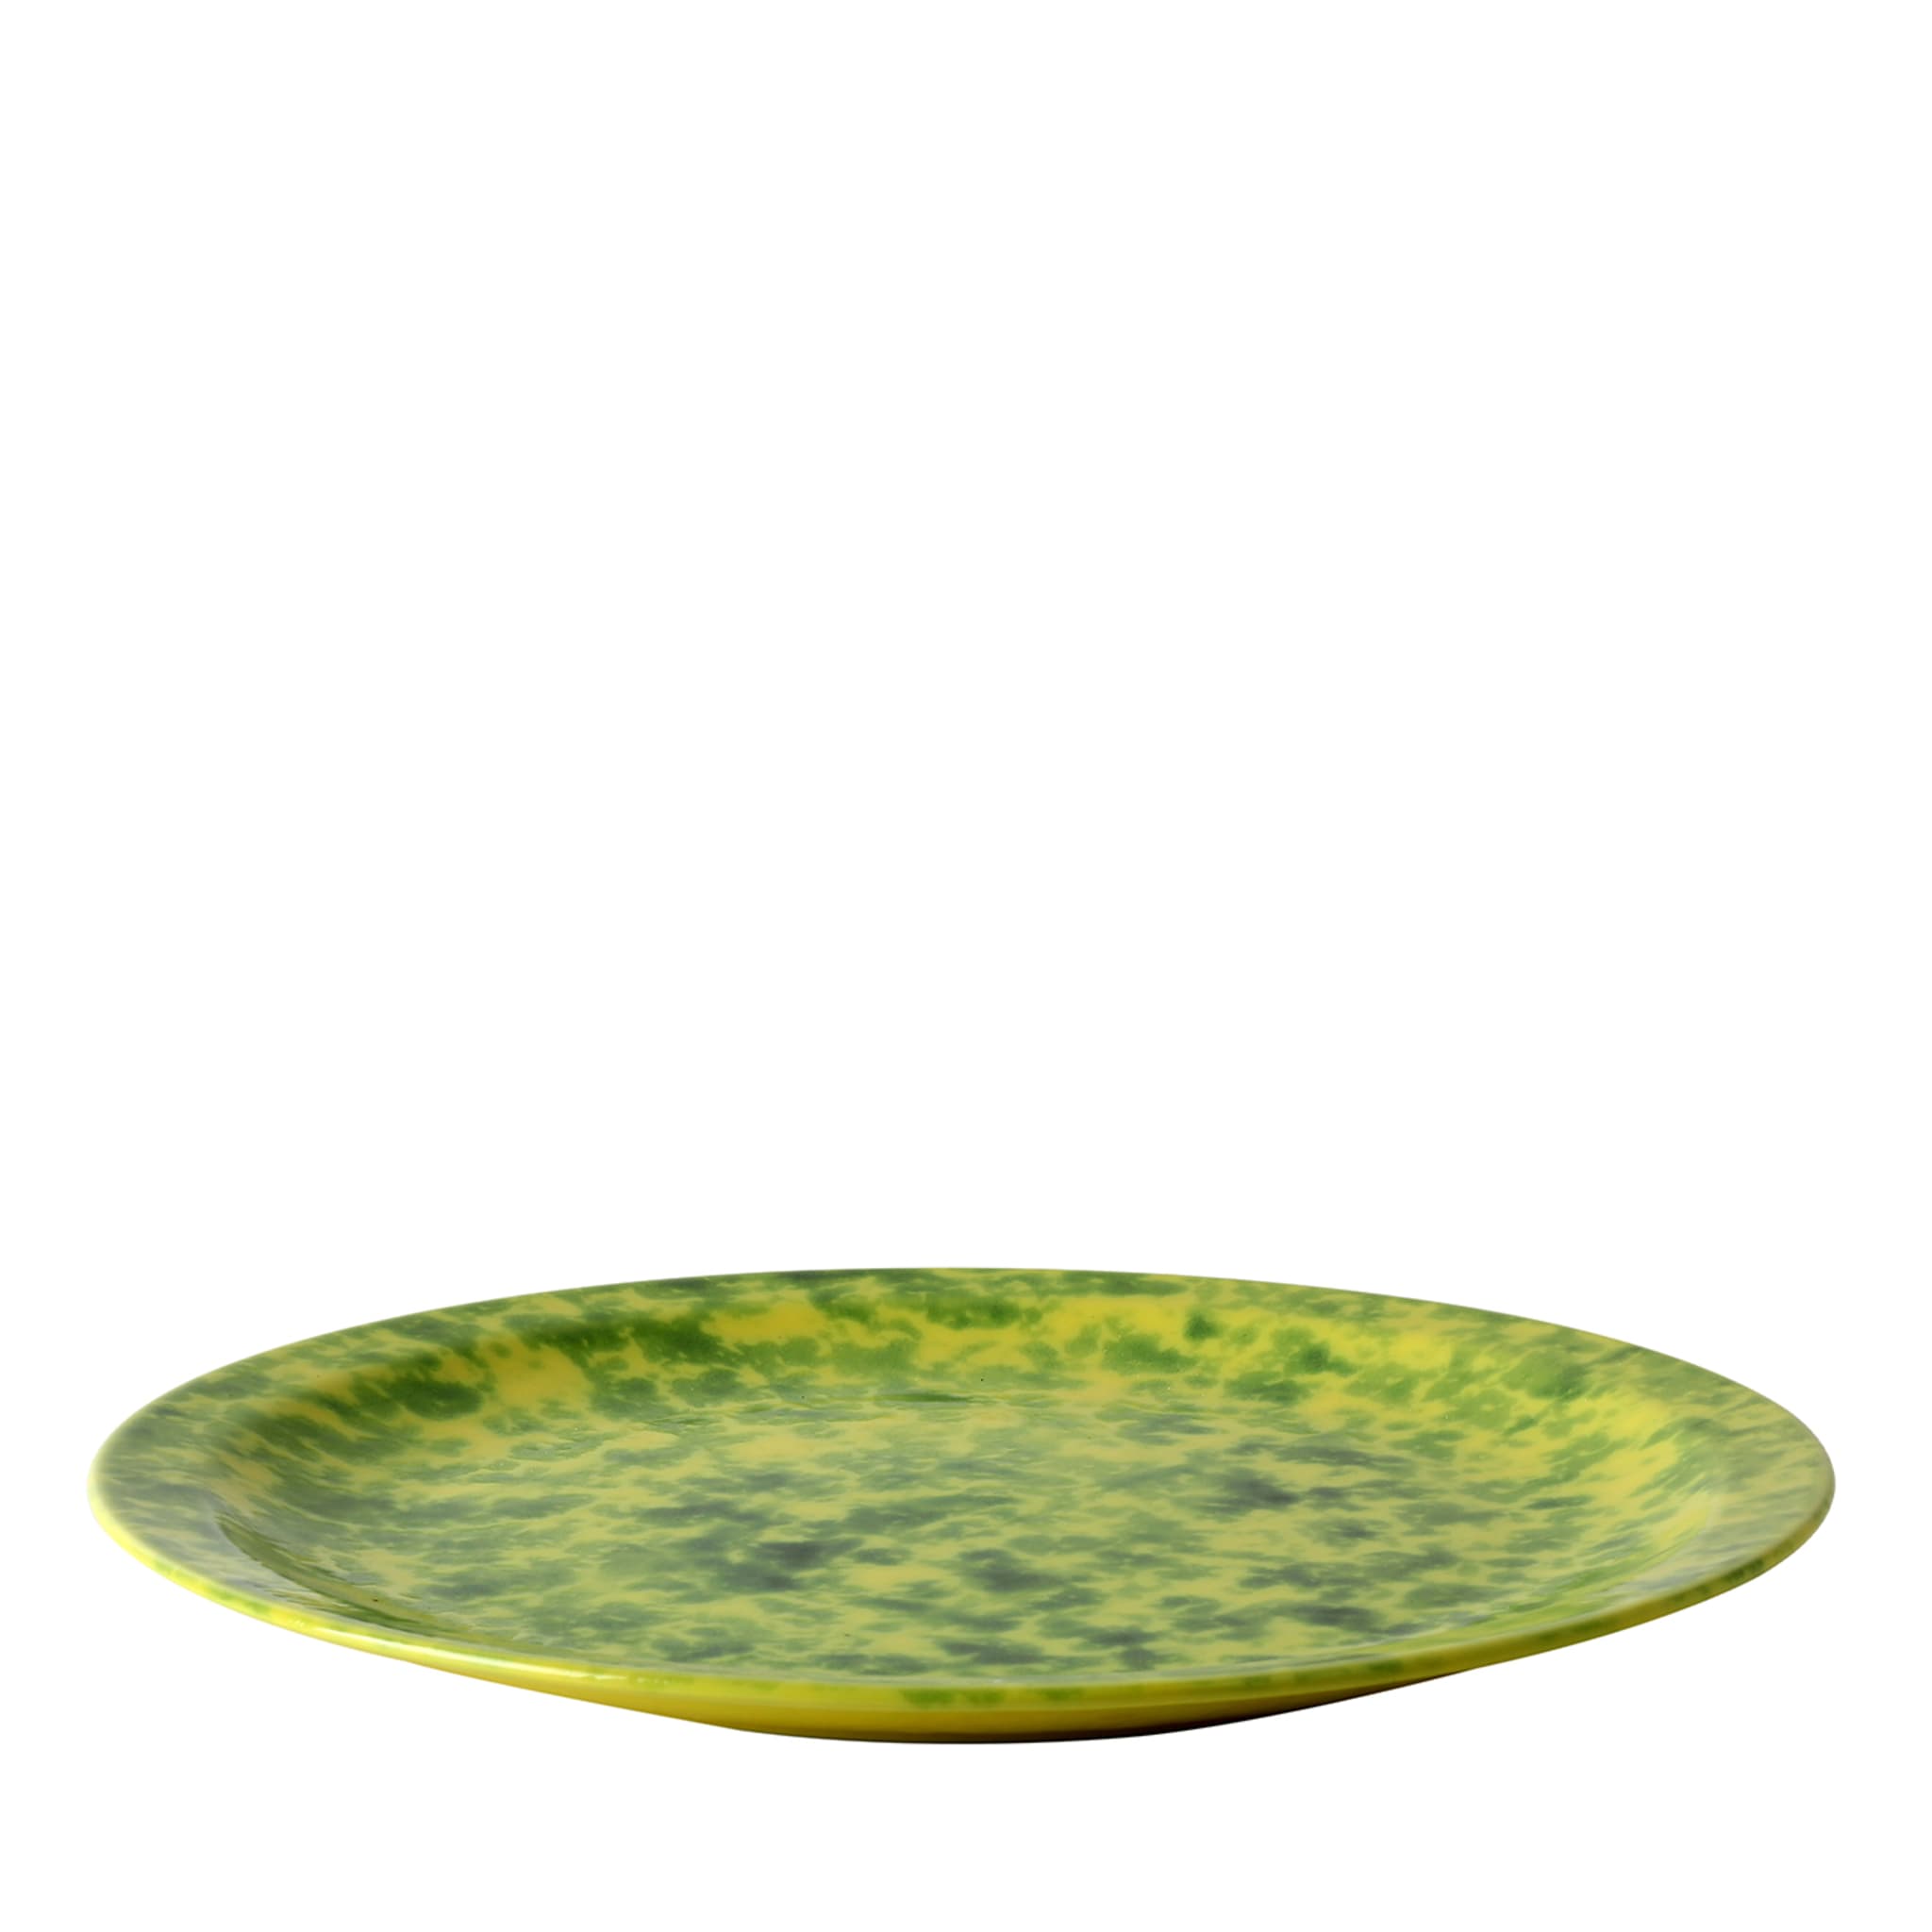 Limoni Round Green-Mottled Yellow Dinner Plate - Alternative view 1